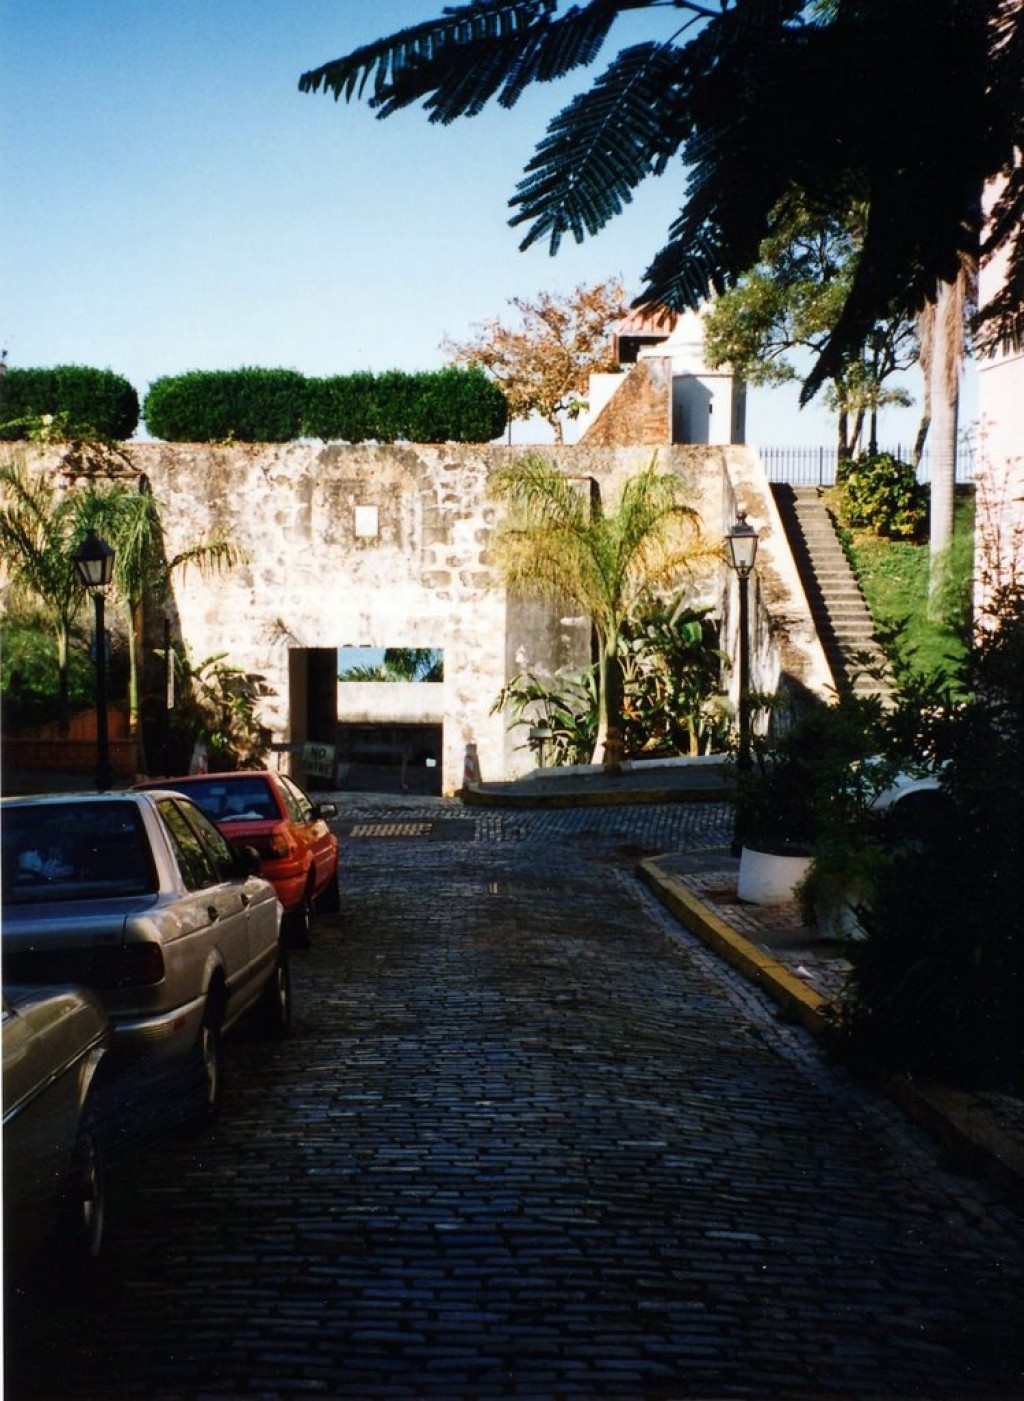 Blue cobblestoned street in San Juan made from ships' ballast